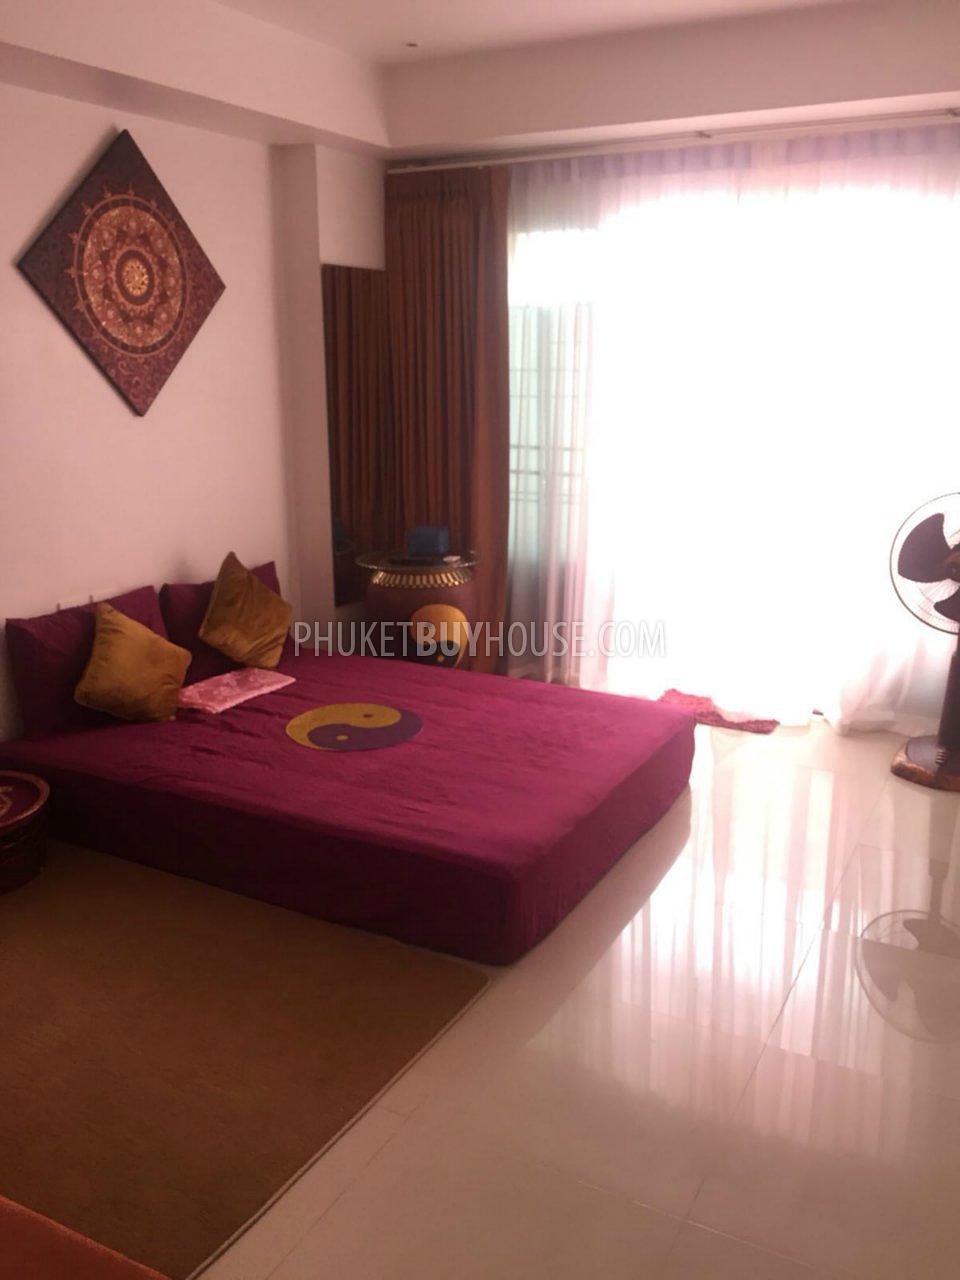 NAI6090: One bedroom beautiful apartment in Nai Harn. Photo #2